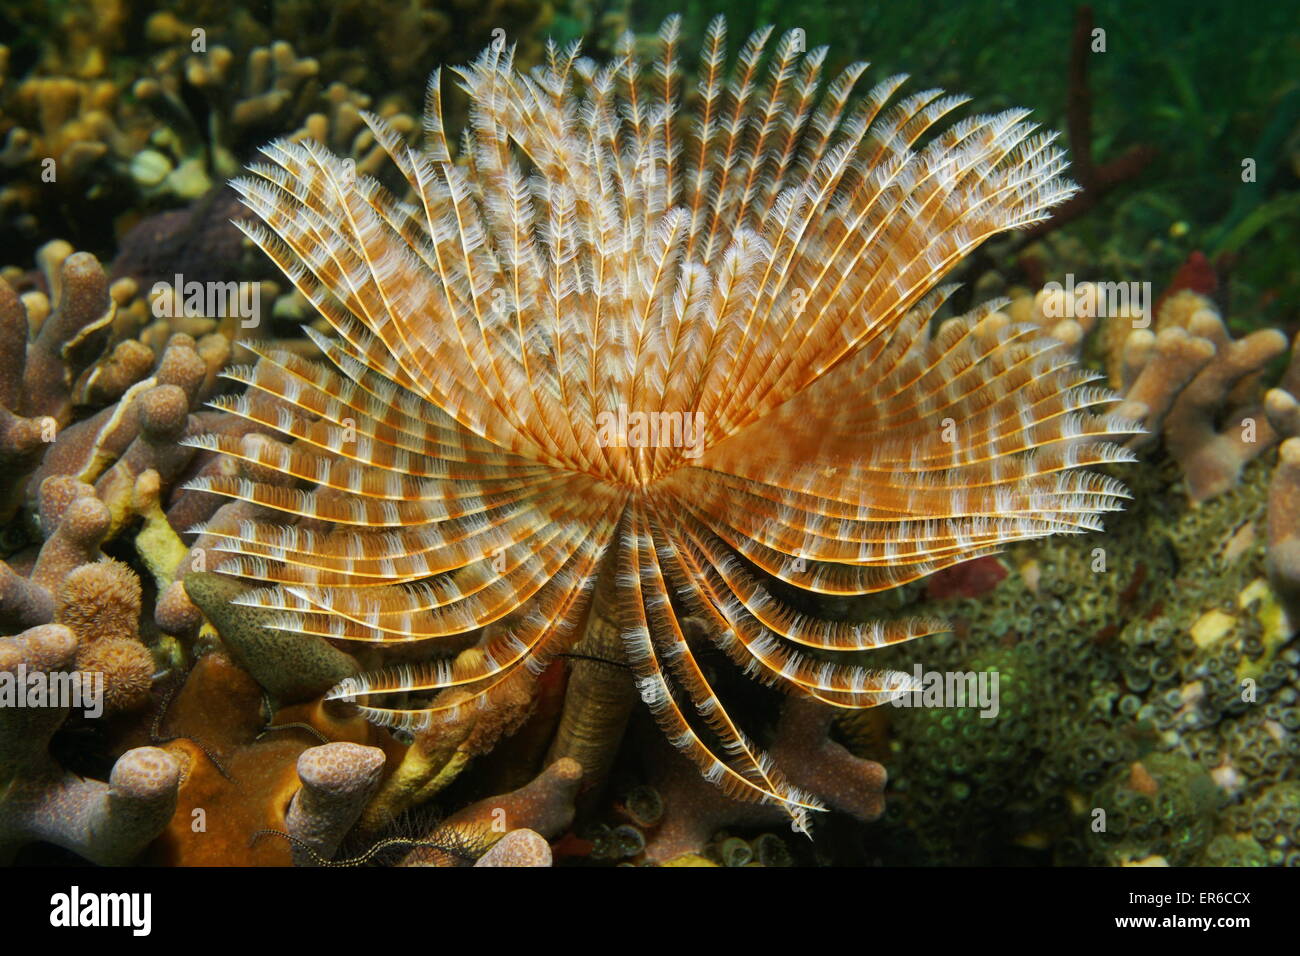 Underwater creature, Magnificent Feather Duster worm, Sabellastarte magnifica, Caribbean sea Stock Photo